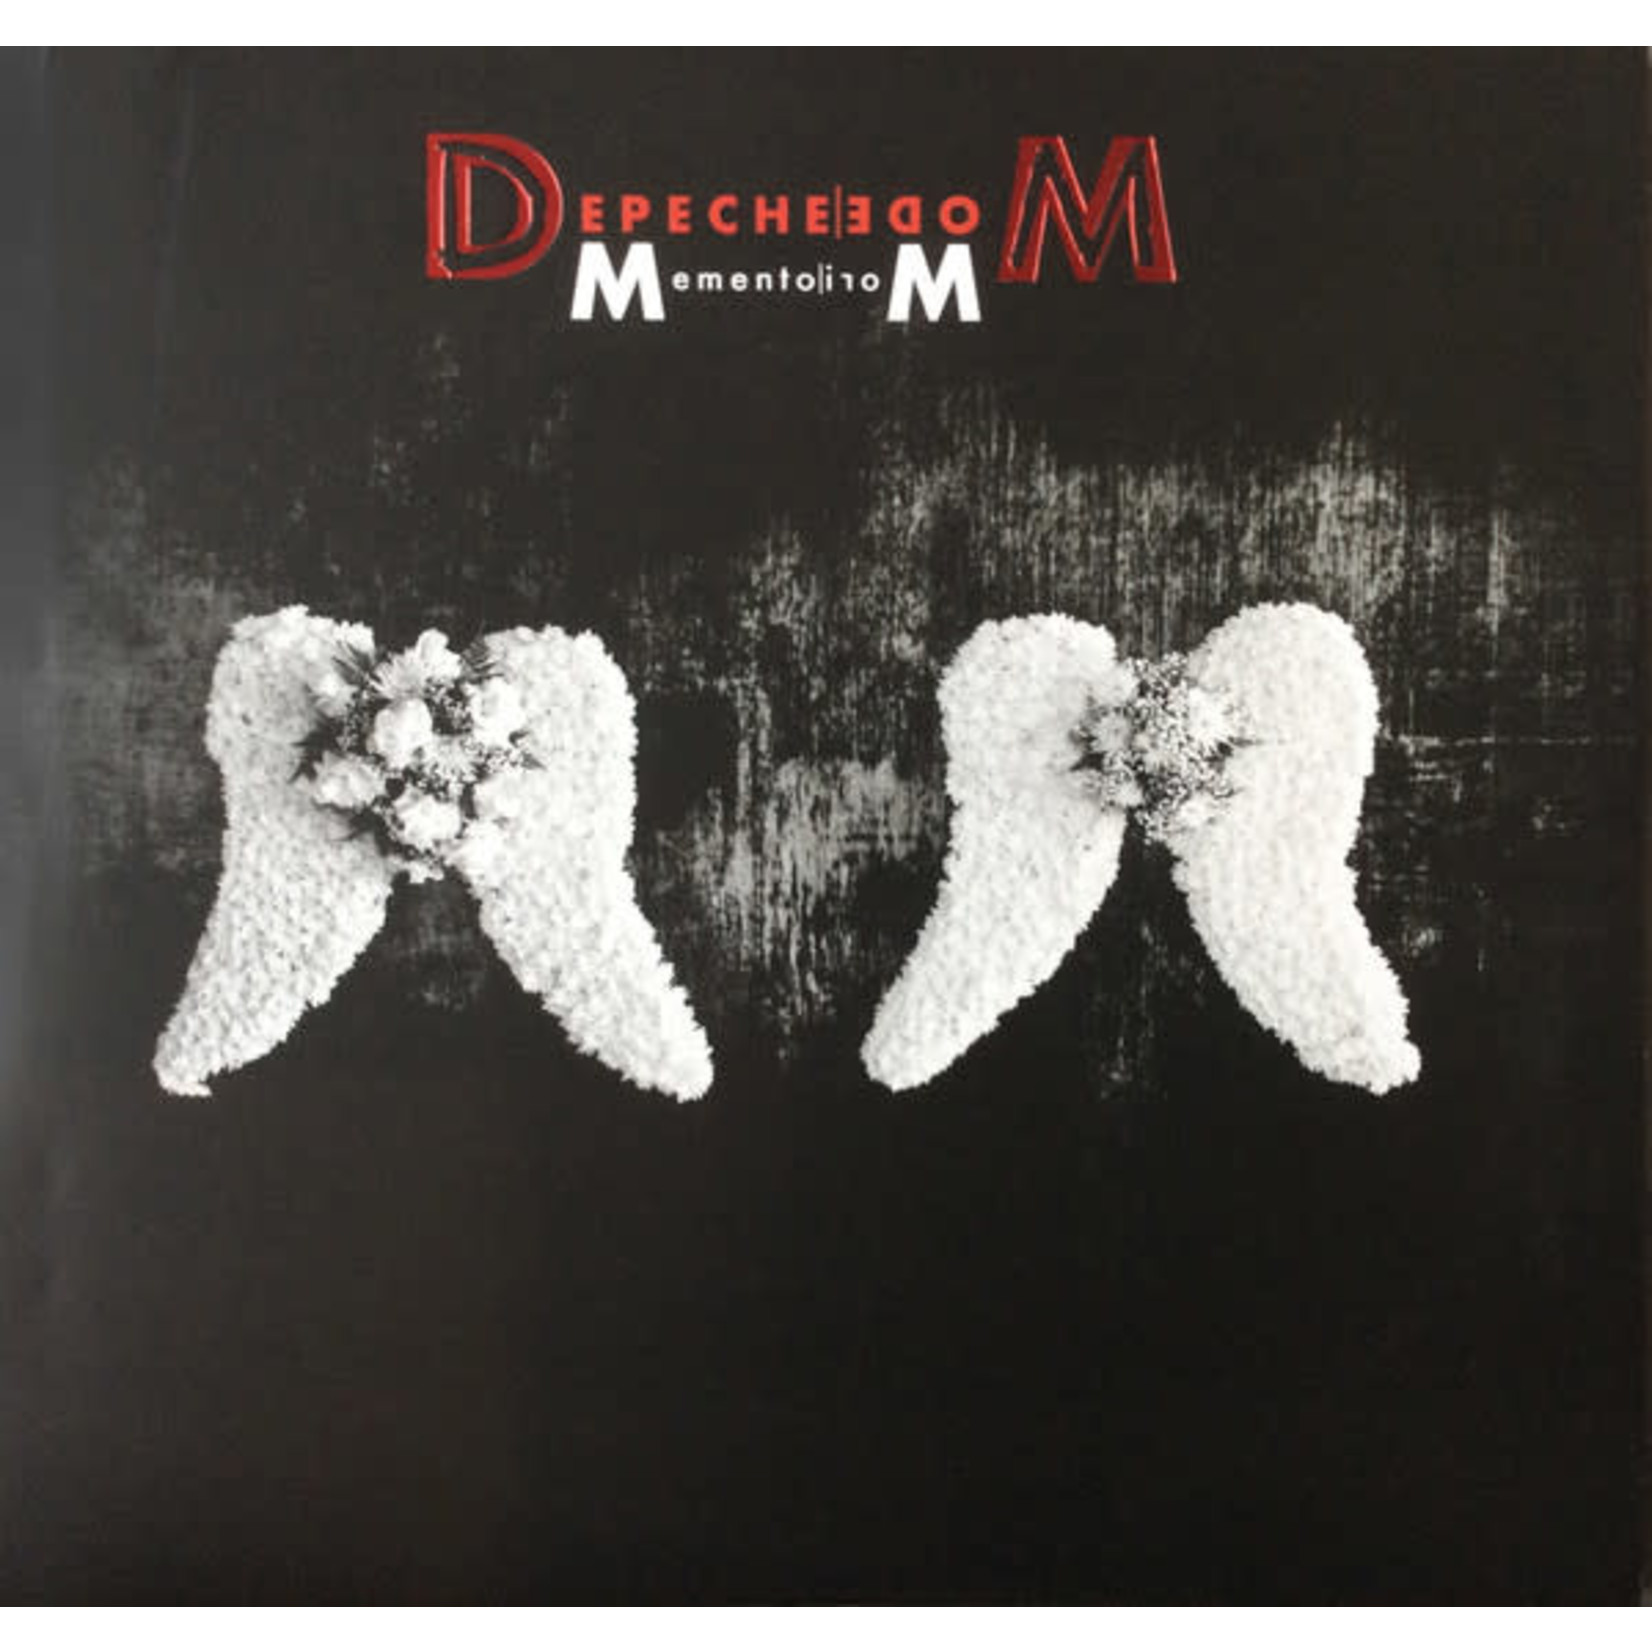 [New] Depeche Mode - Memento Mori (2LP, etching)